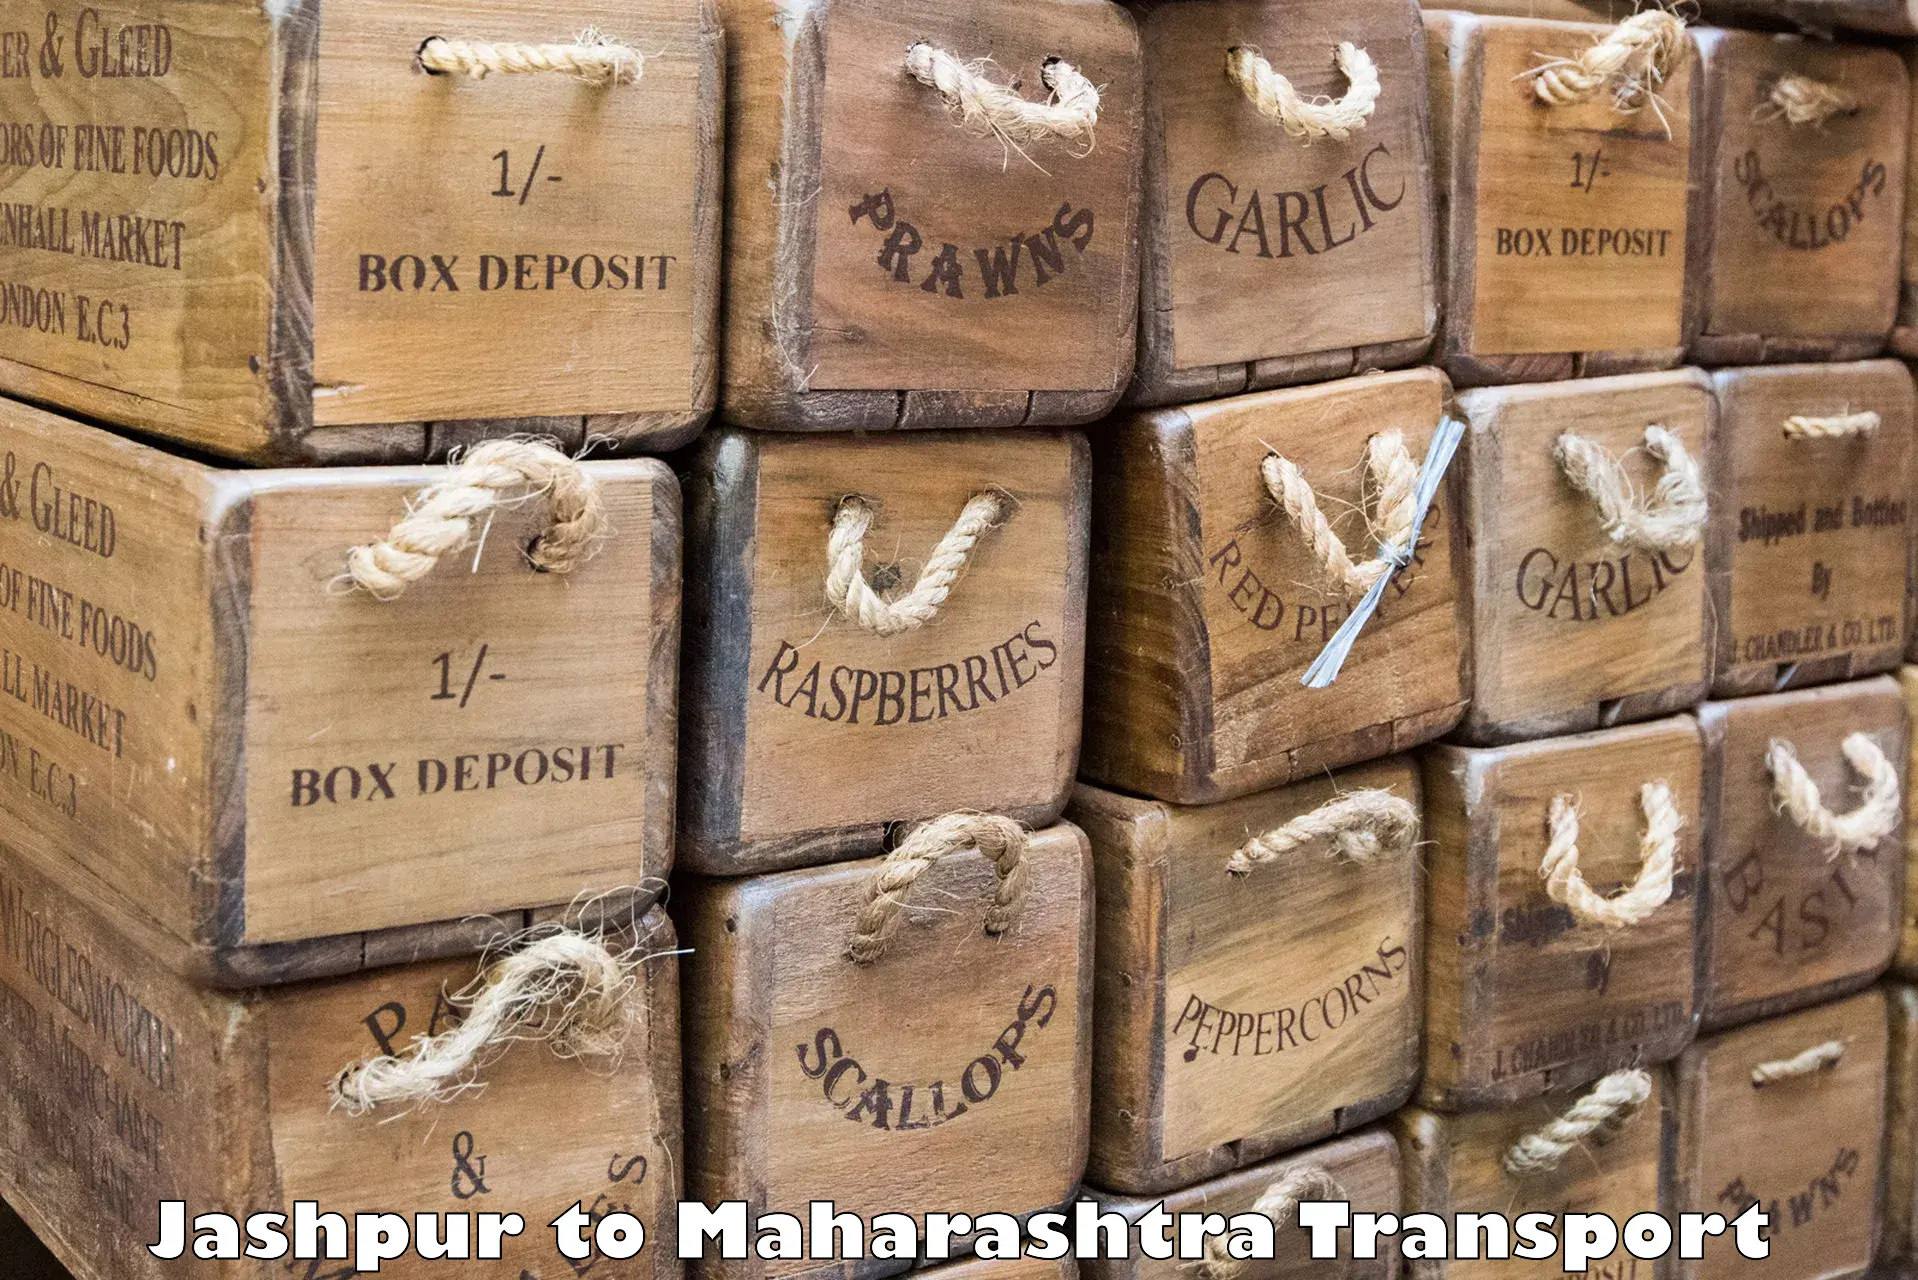 Commercial transport service Jashpur to Bhiwandi